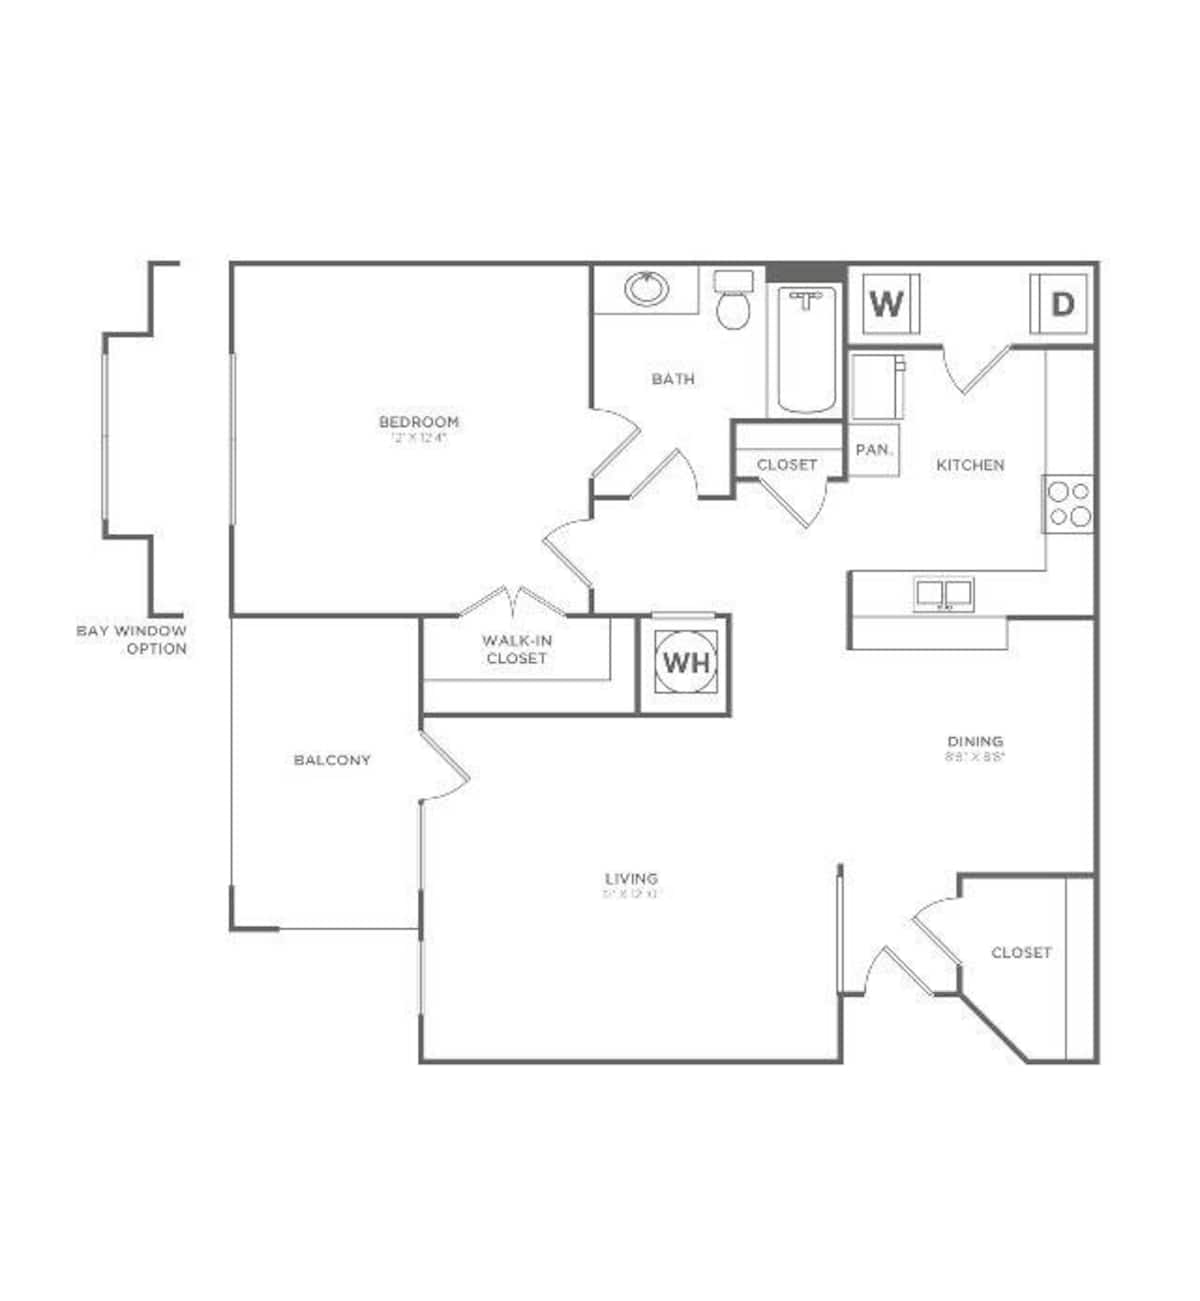 Floorplan diagram for Ascot (759 SF), showing 1 bedroom